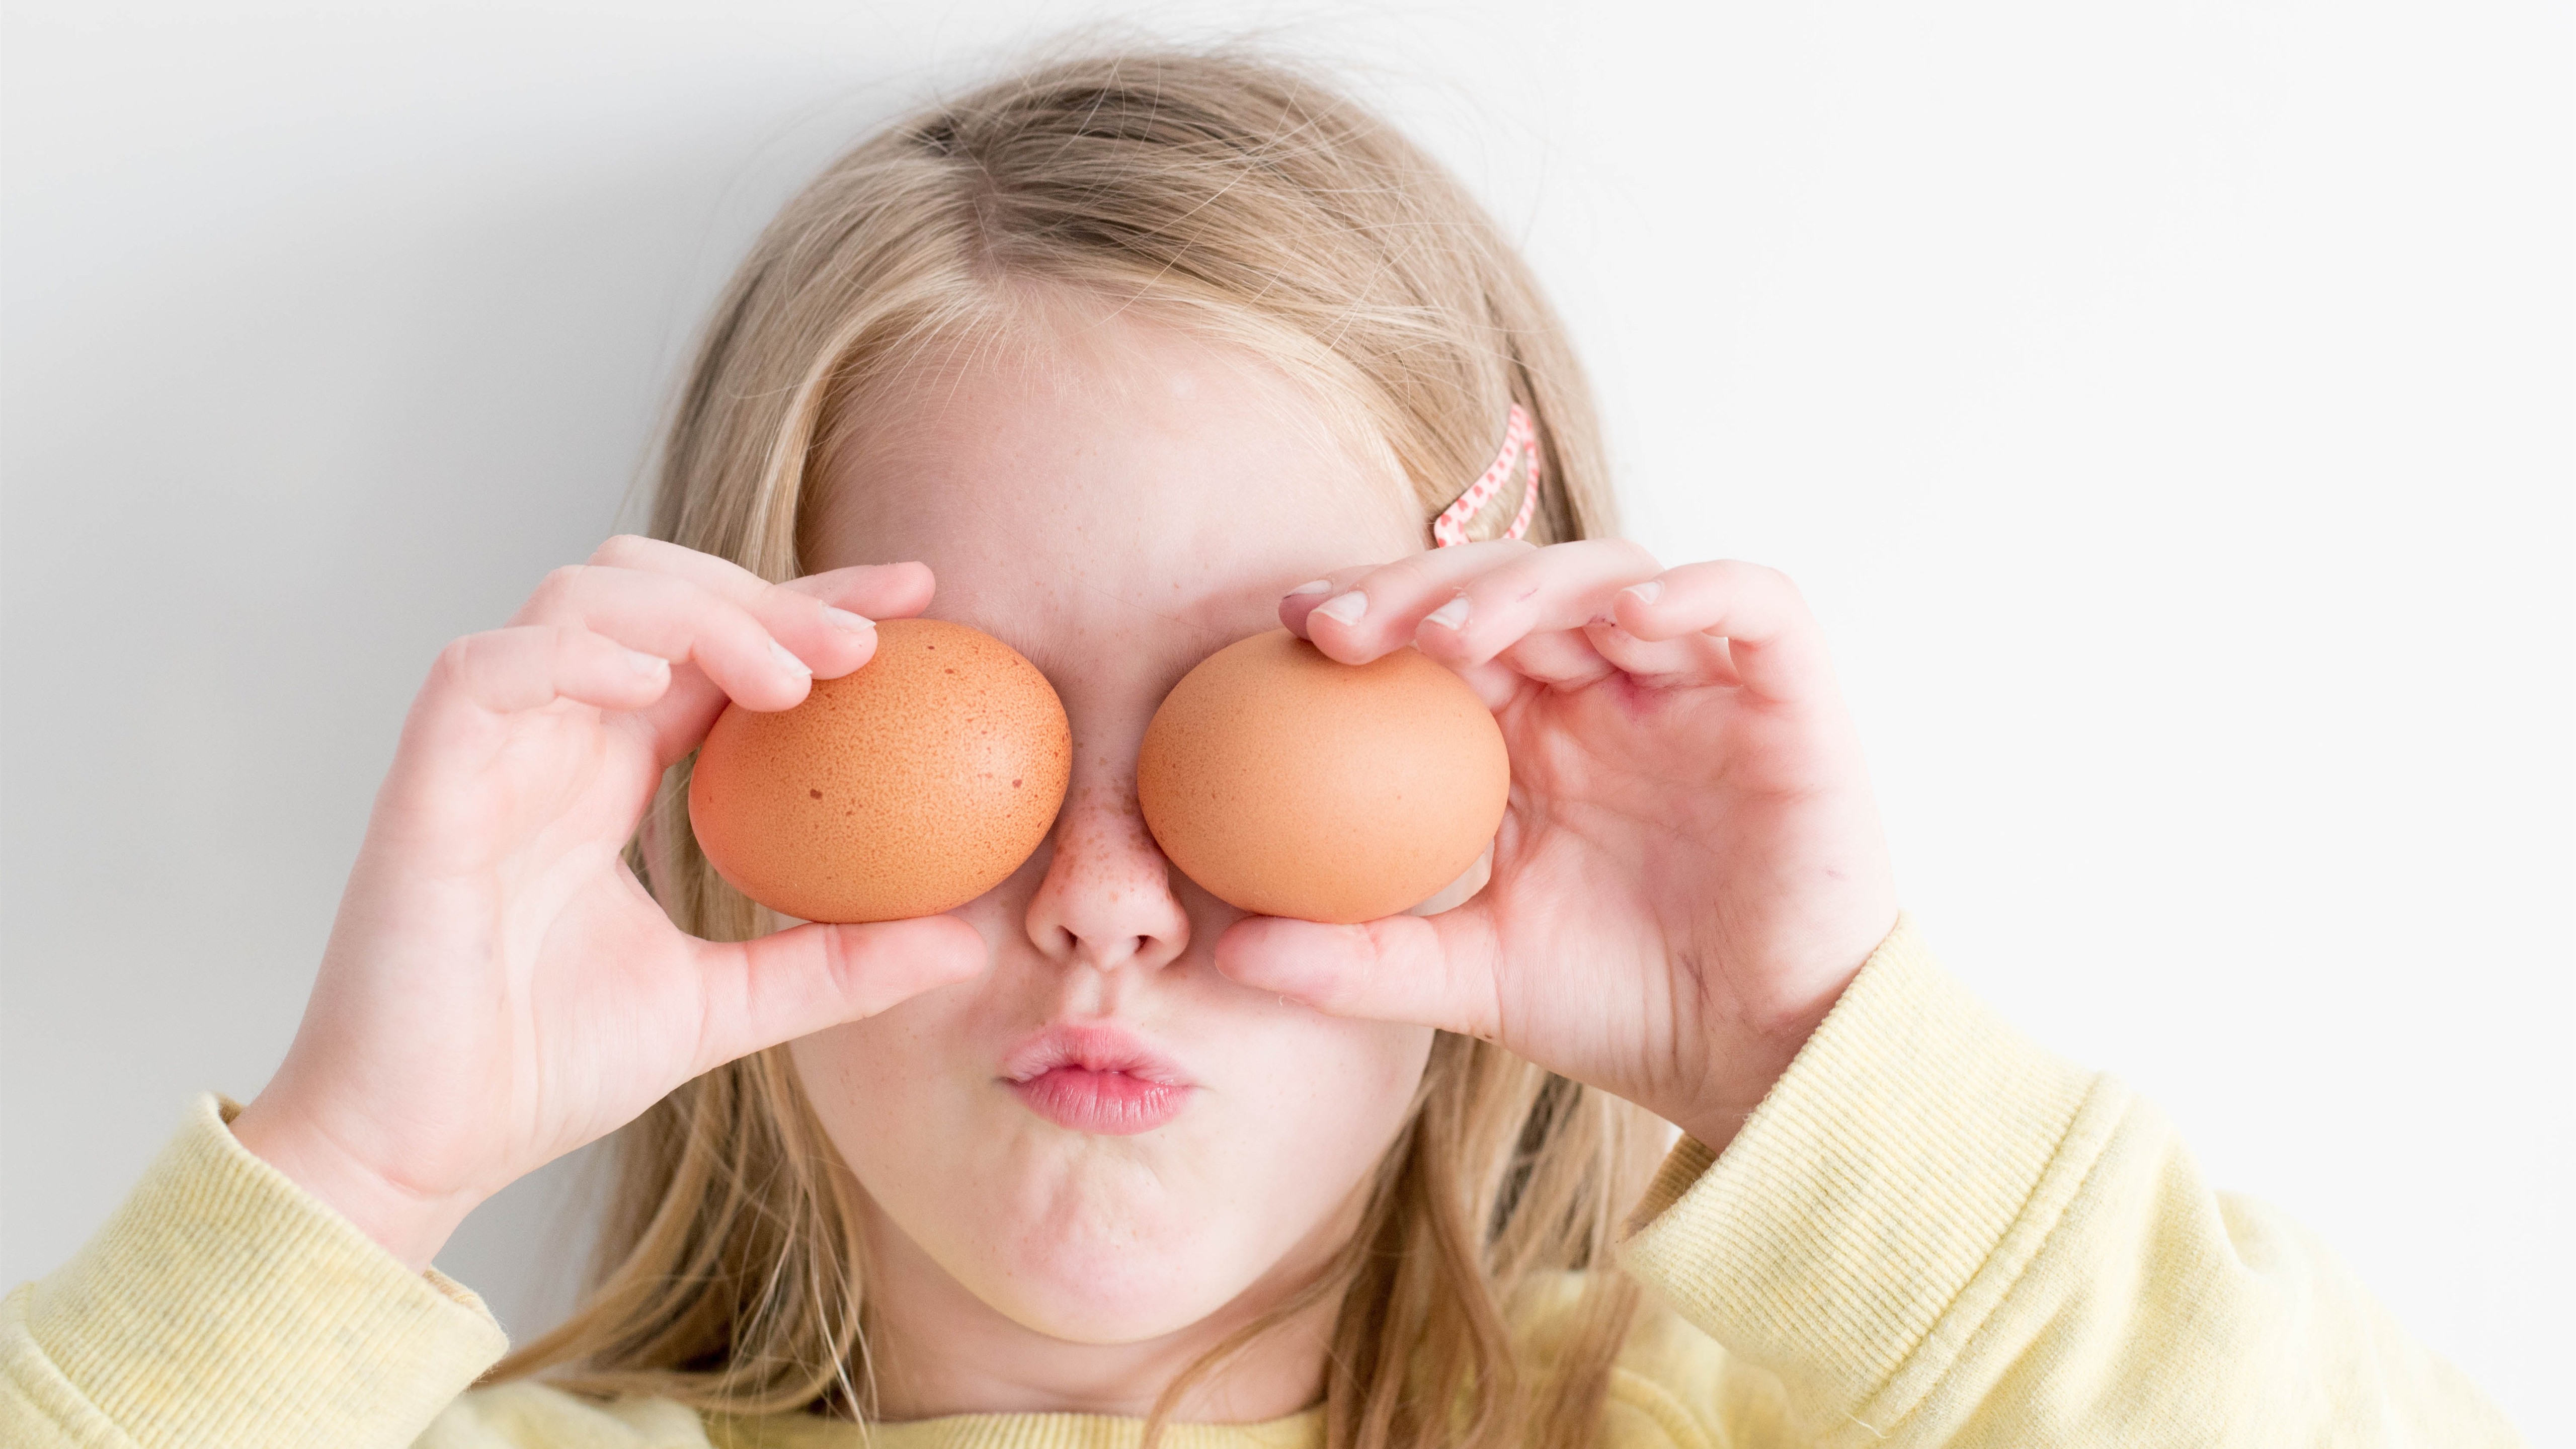 Beautiful Baby Girl Play With Egg 5k Wallpaper - Eating Egg - HD Wallpaper 